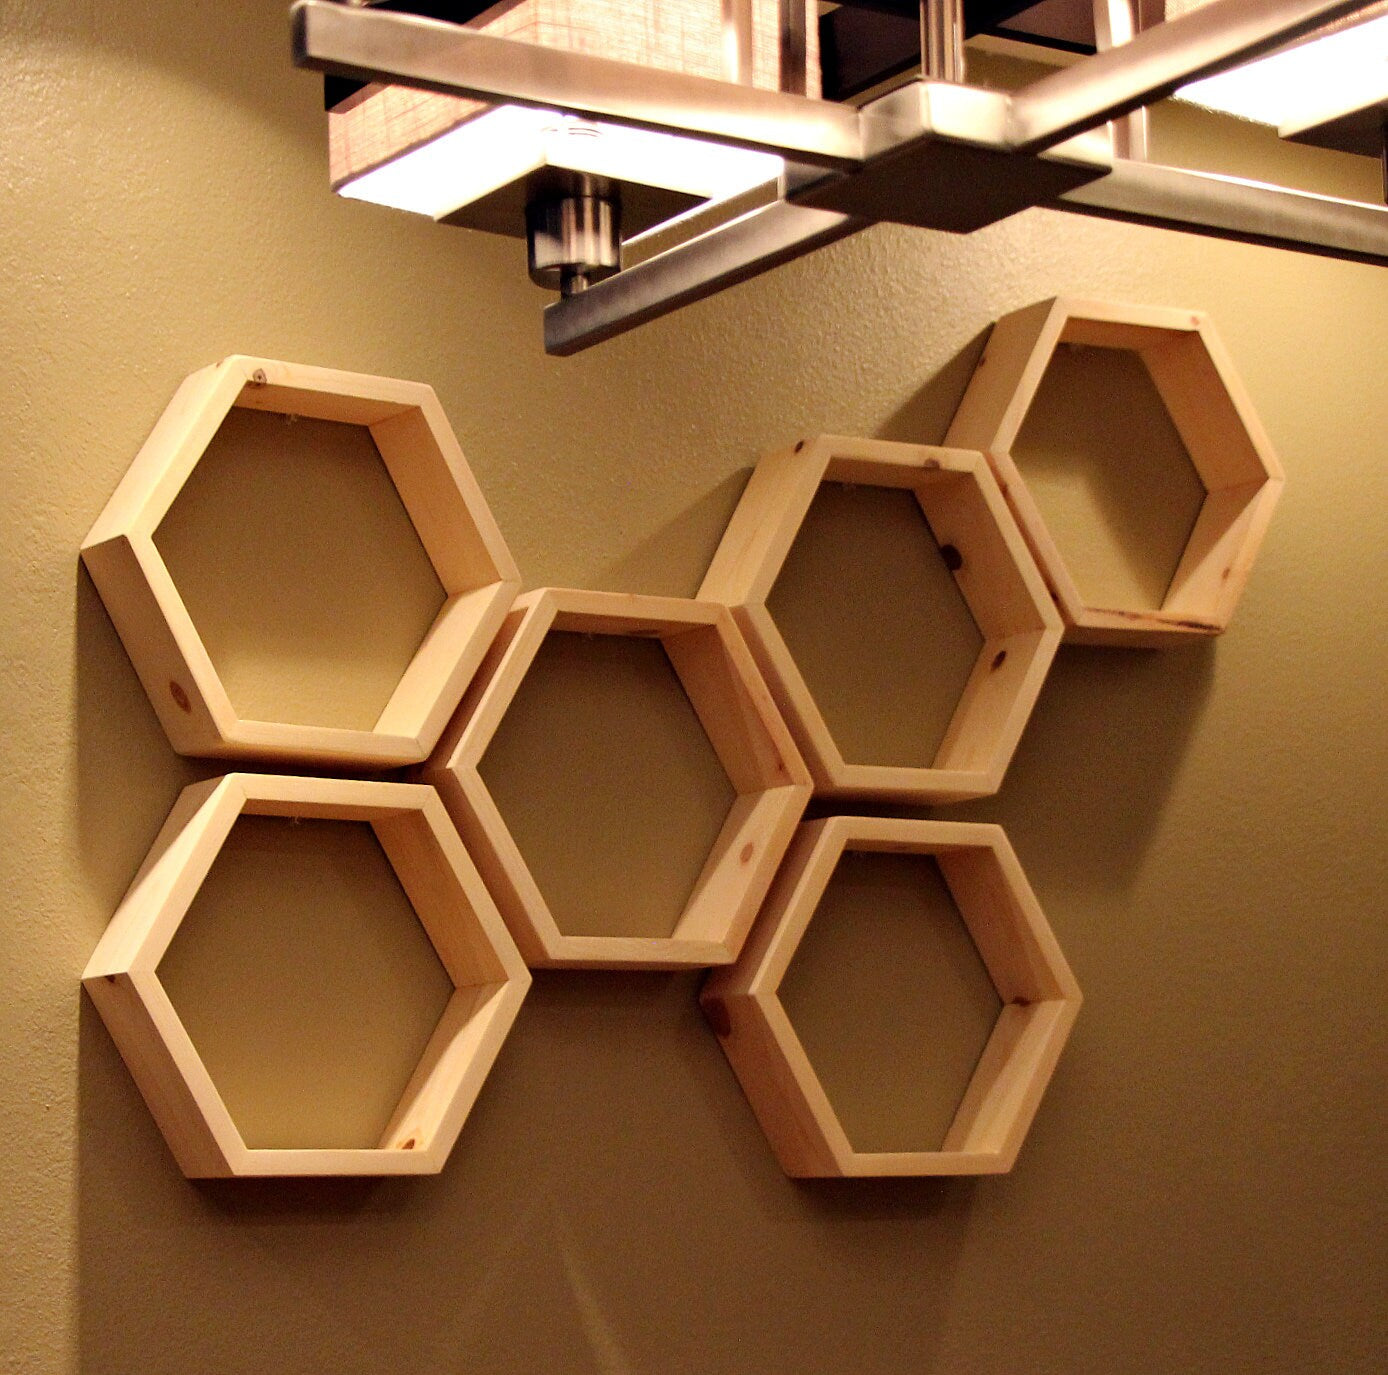 6 Hexagon Shelves, Hexagon Shelf, Honeycomb Shelf, Honeycomb Shelves, Floating Hexagon Shelf, Floating Honeycomb Shelves, Hexagon